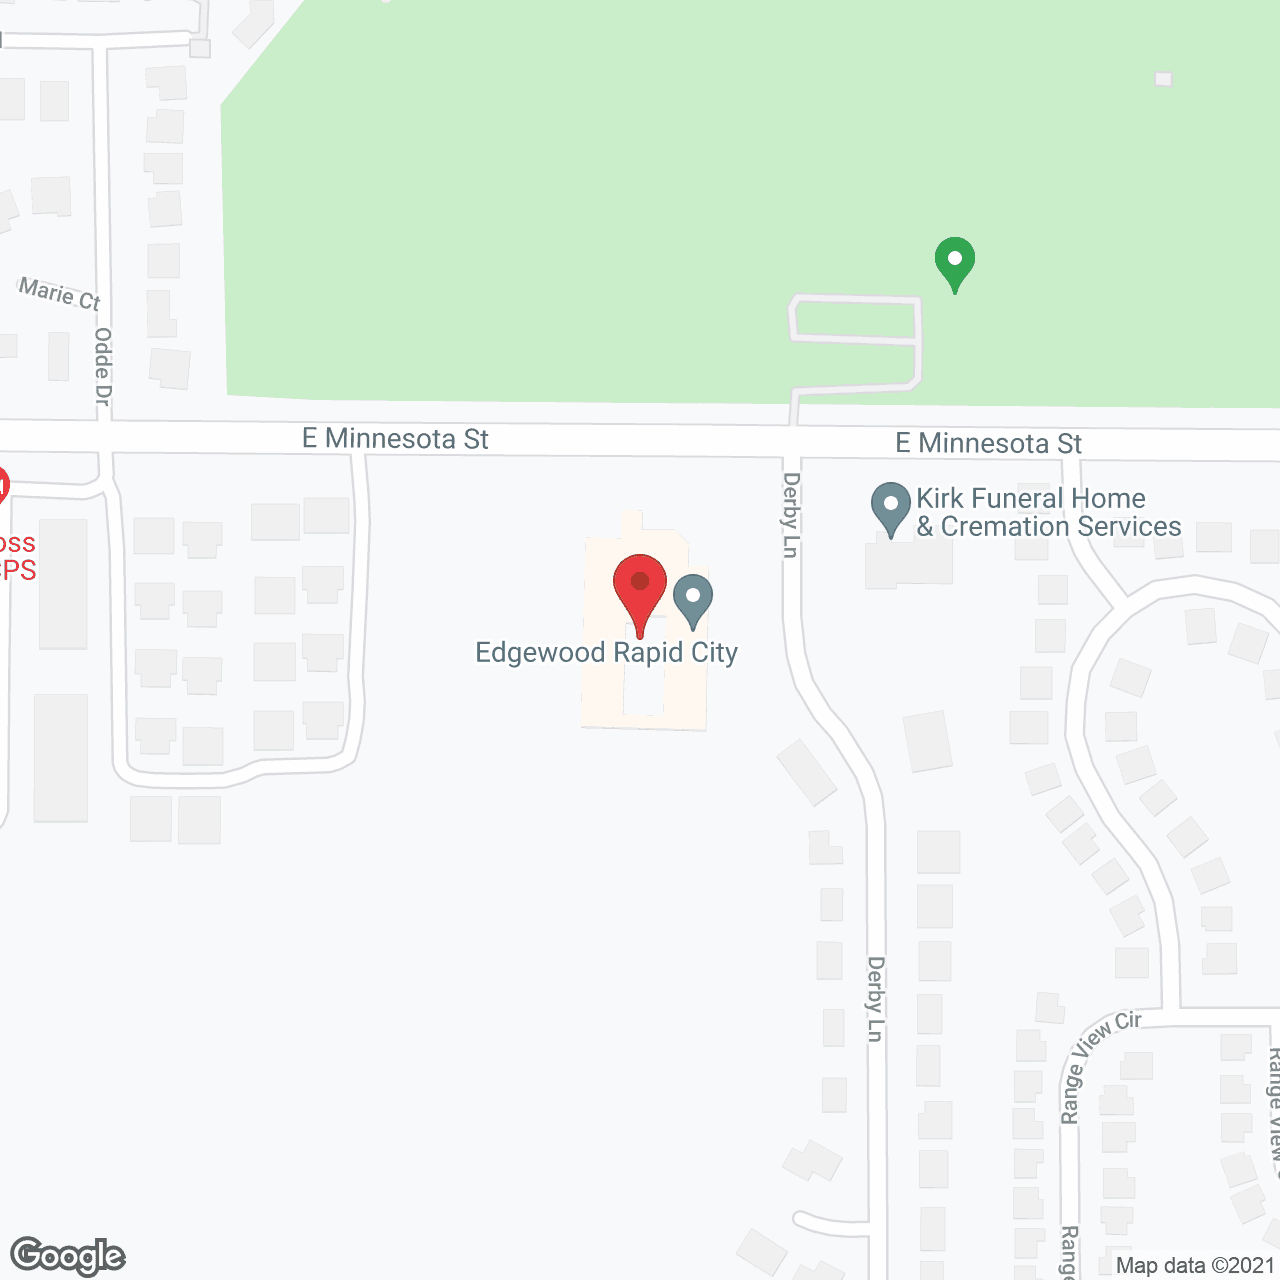 Edgewood Rapid City in google map